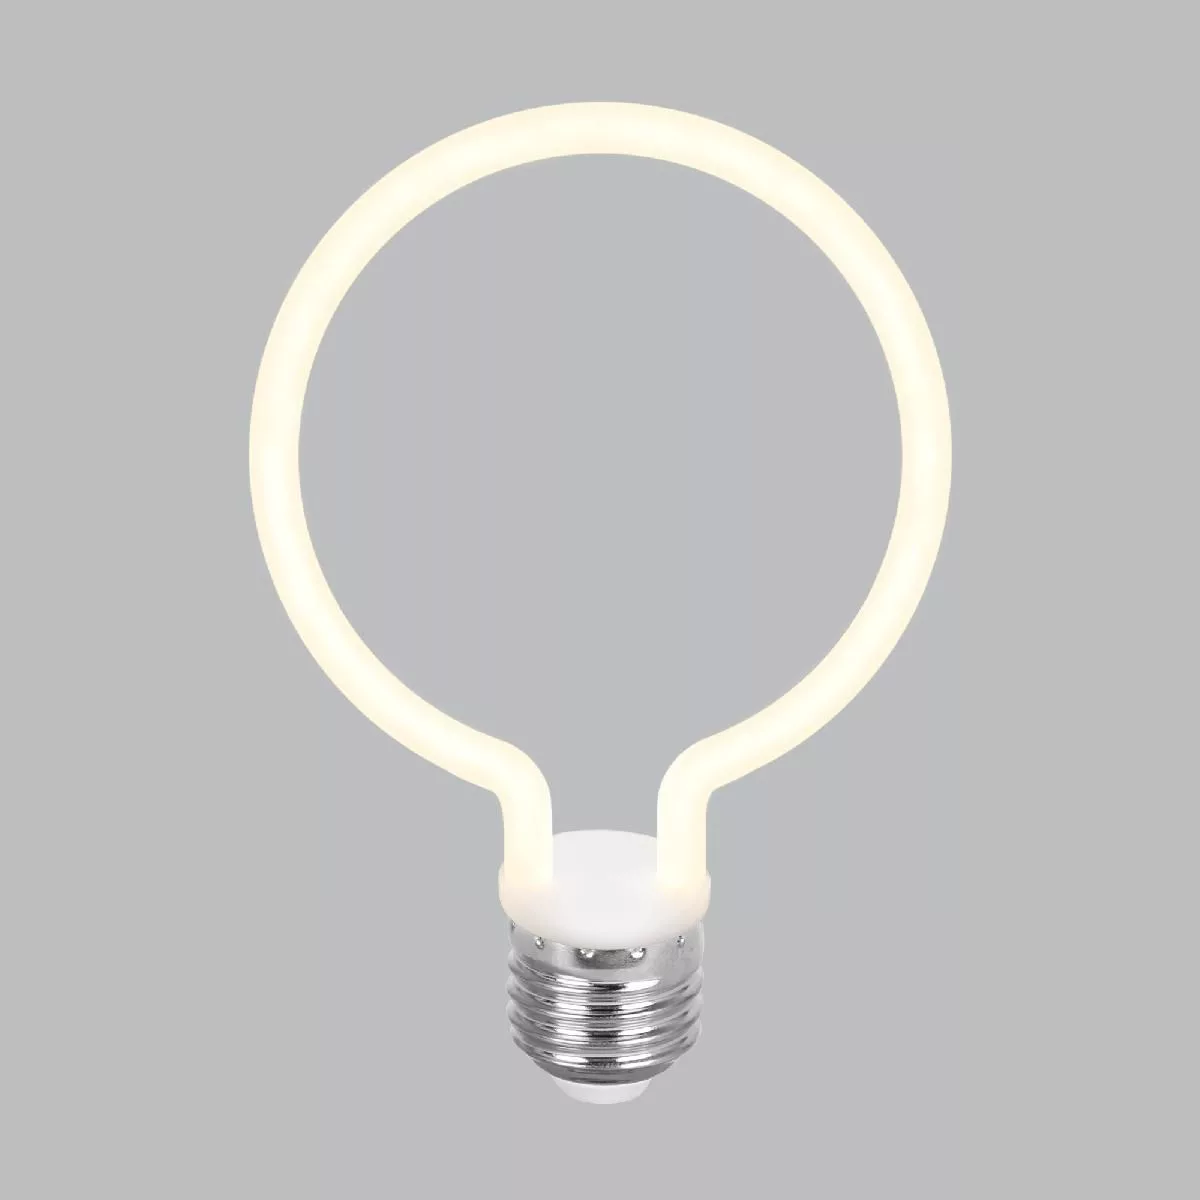 Контурная лампа Decor filament 4 Вт 2700K E27 Elektrostandard BL156